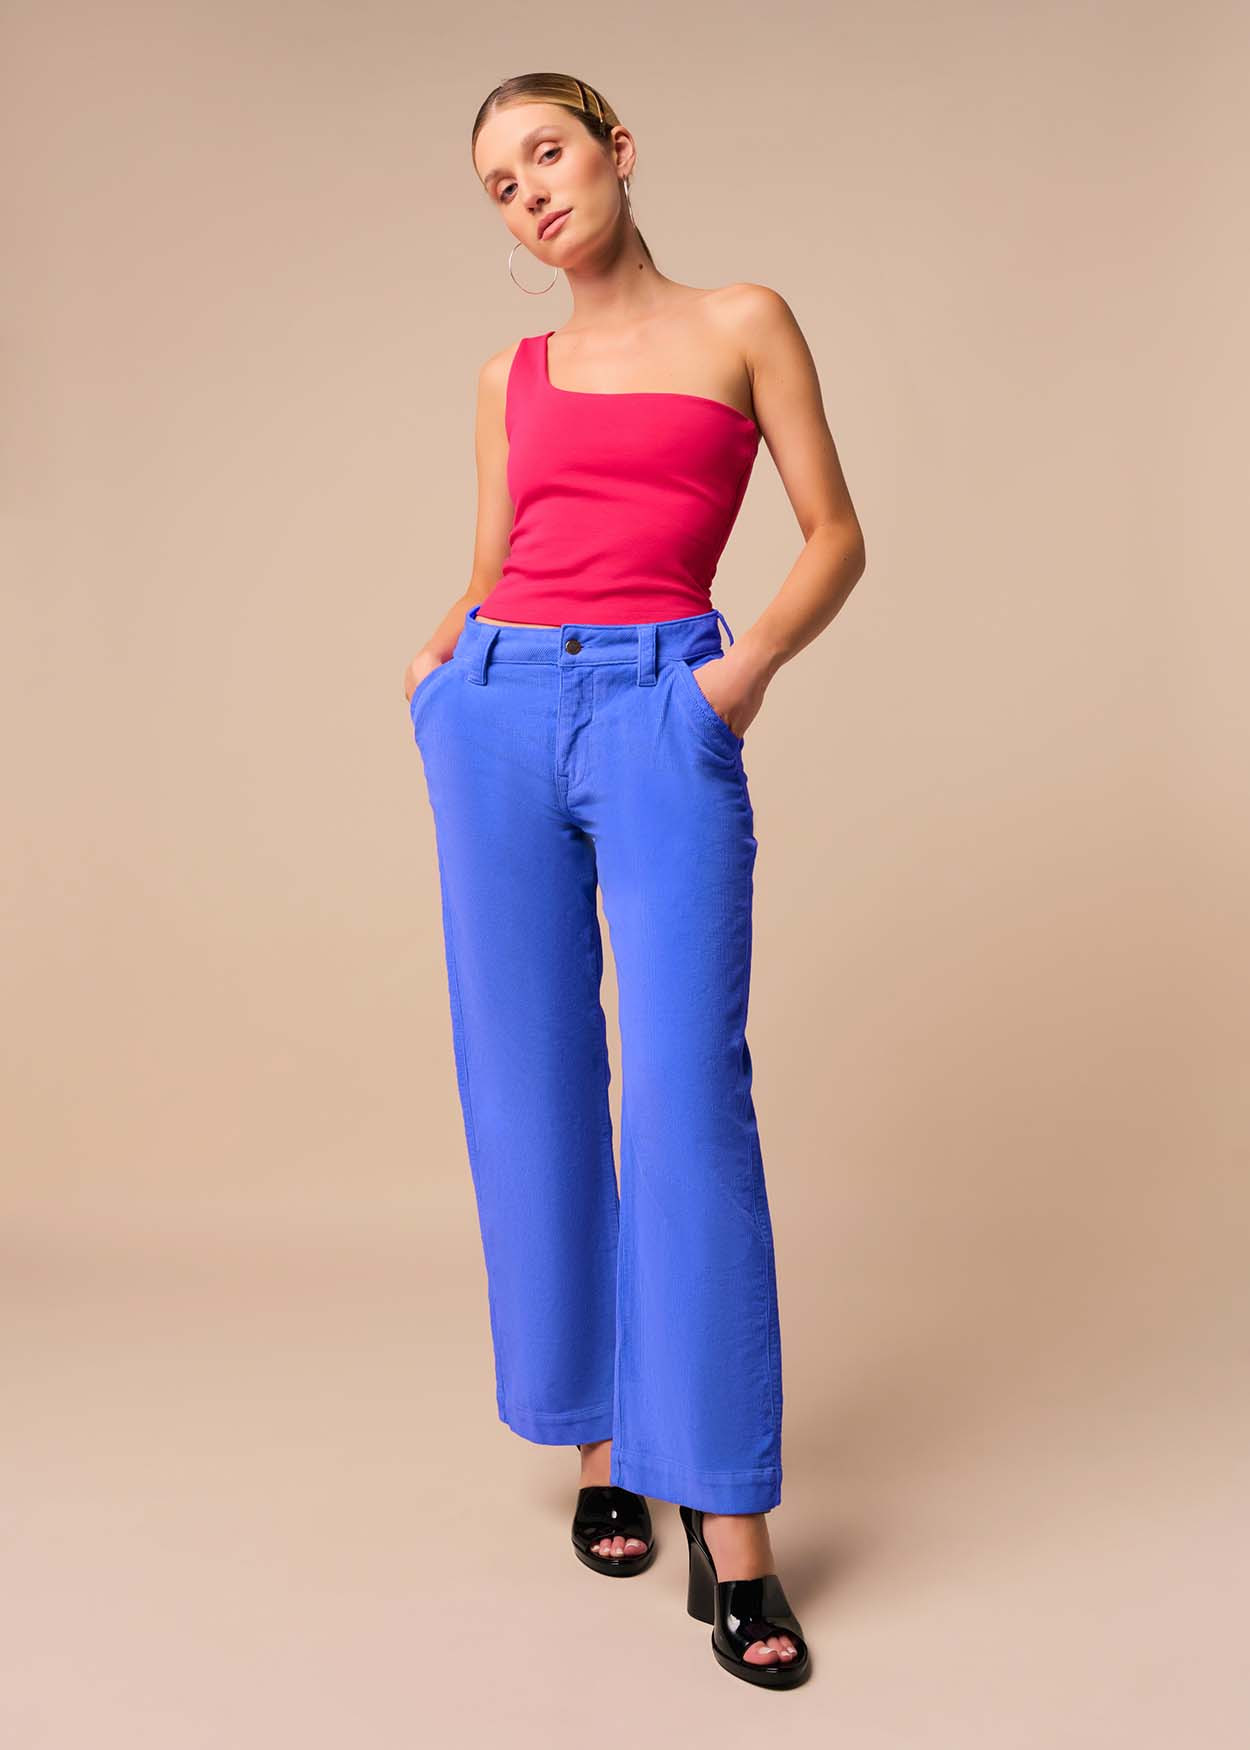 OLIVIA GHALIA - Pantalon Chino |Taille Moyenne- Jambe Ample Droite | Taille en pouces